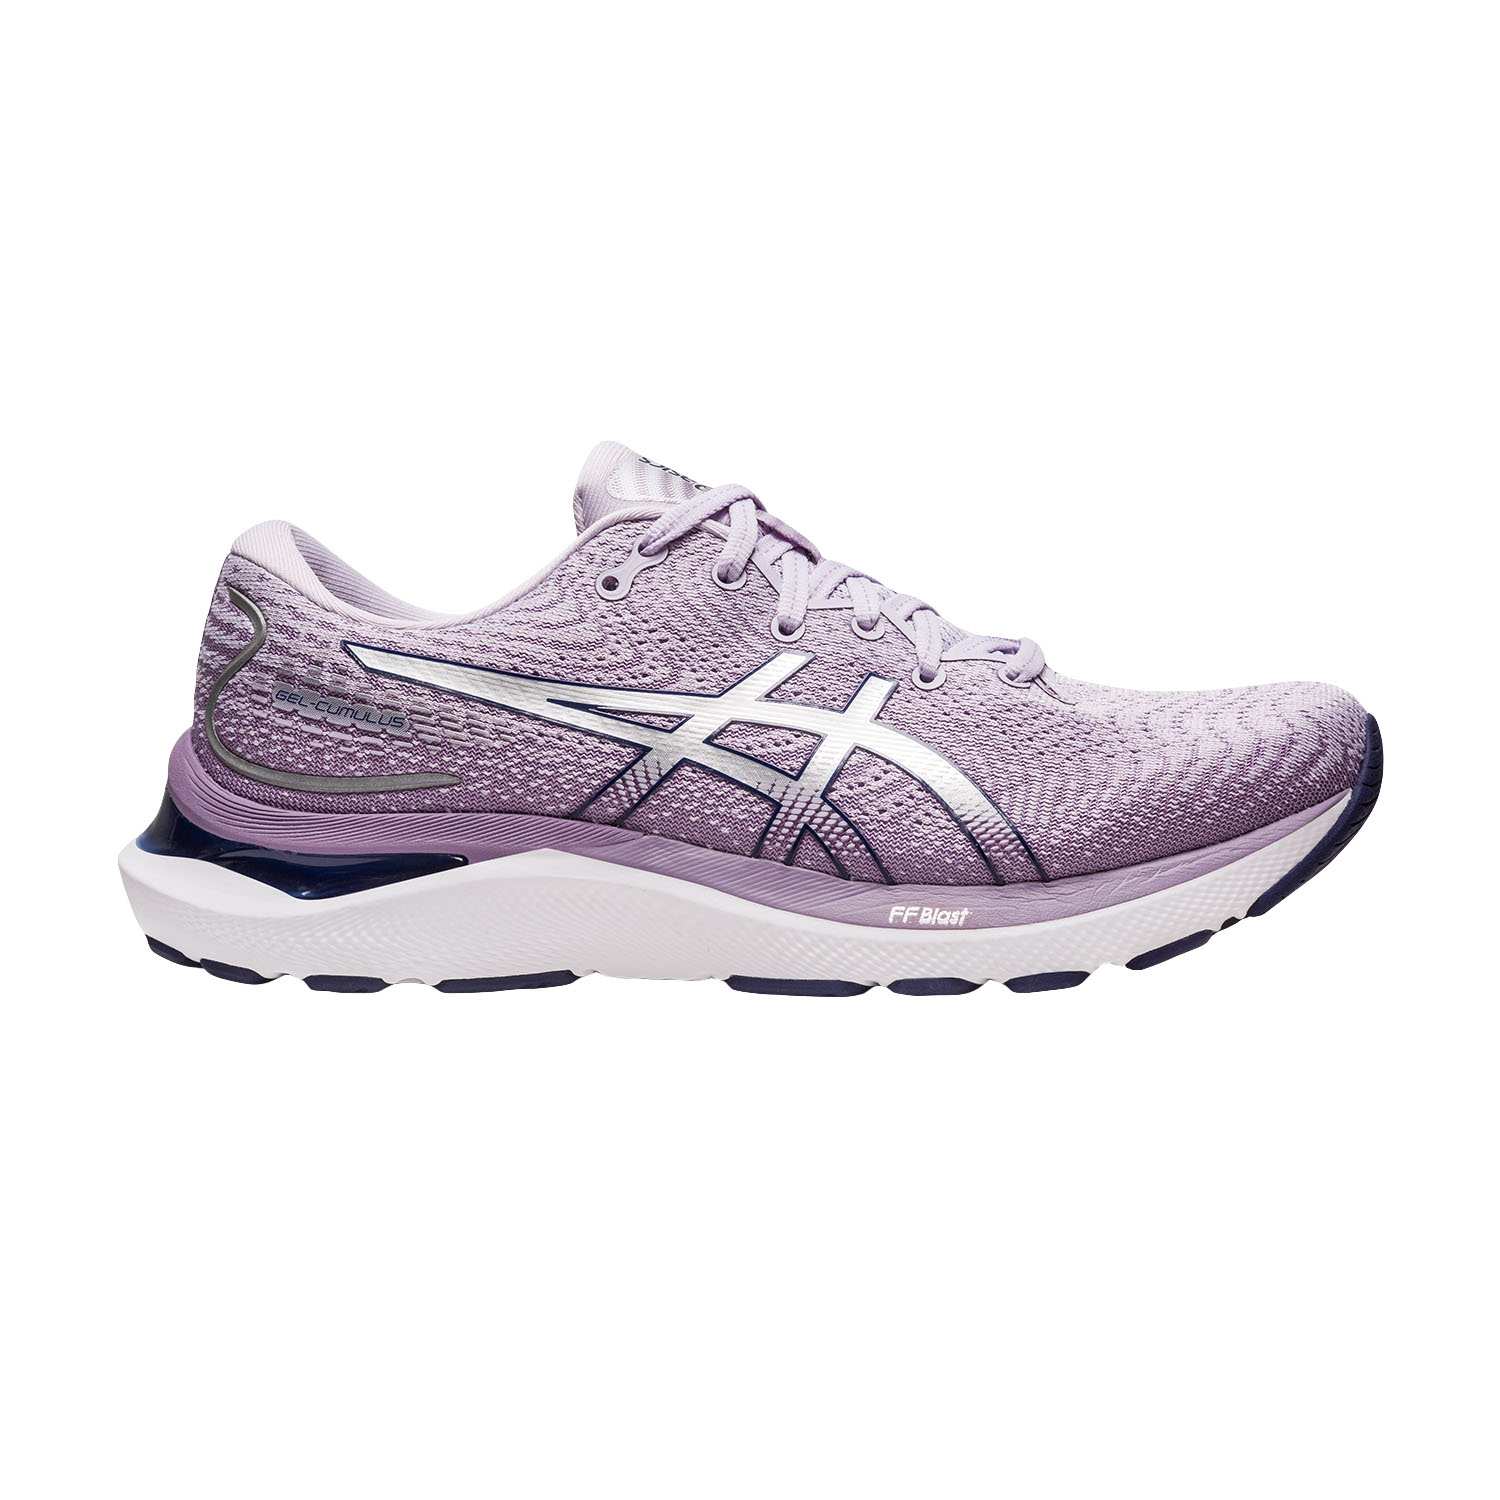 Asics Gel Cumulus 24 Women's Running Shoes - Dusk Violet